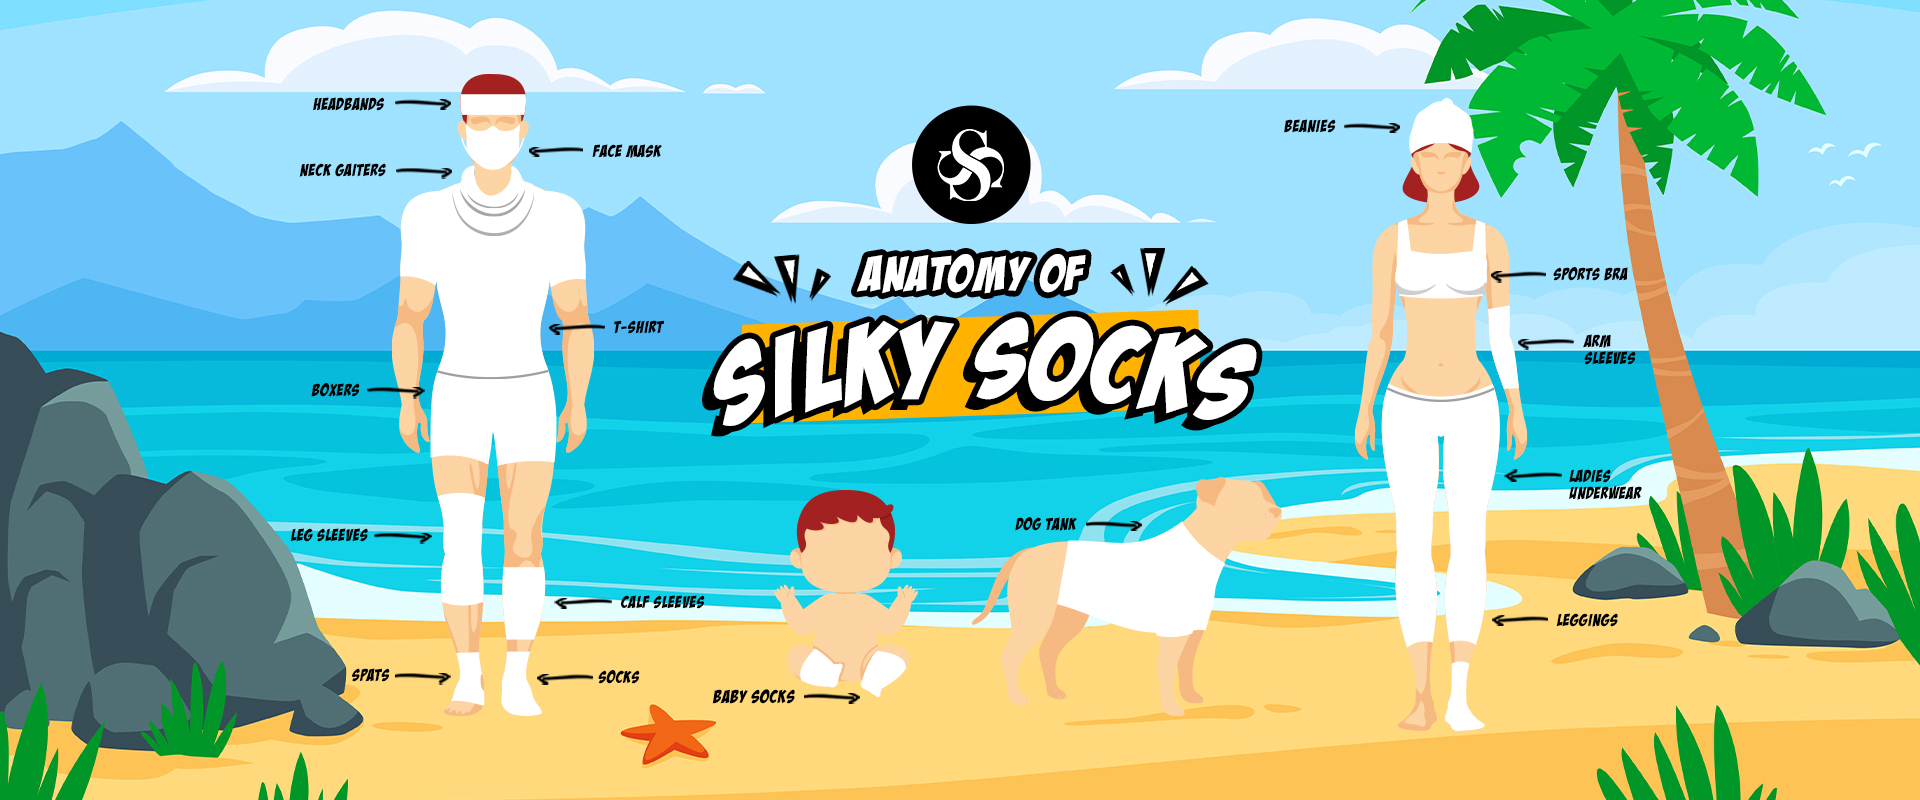 Sublimation Sports Bra by Silky Socks